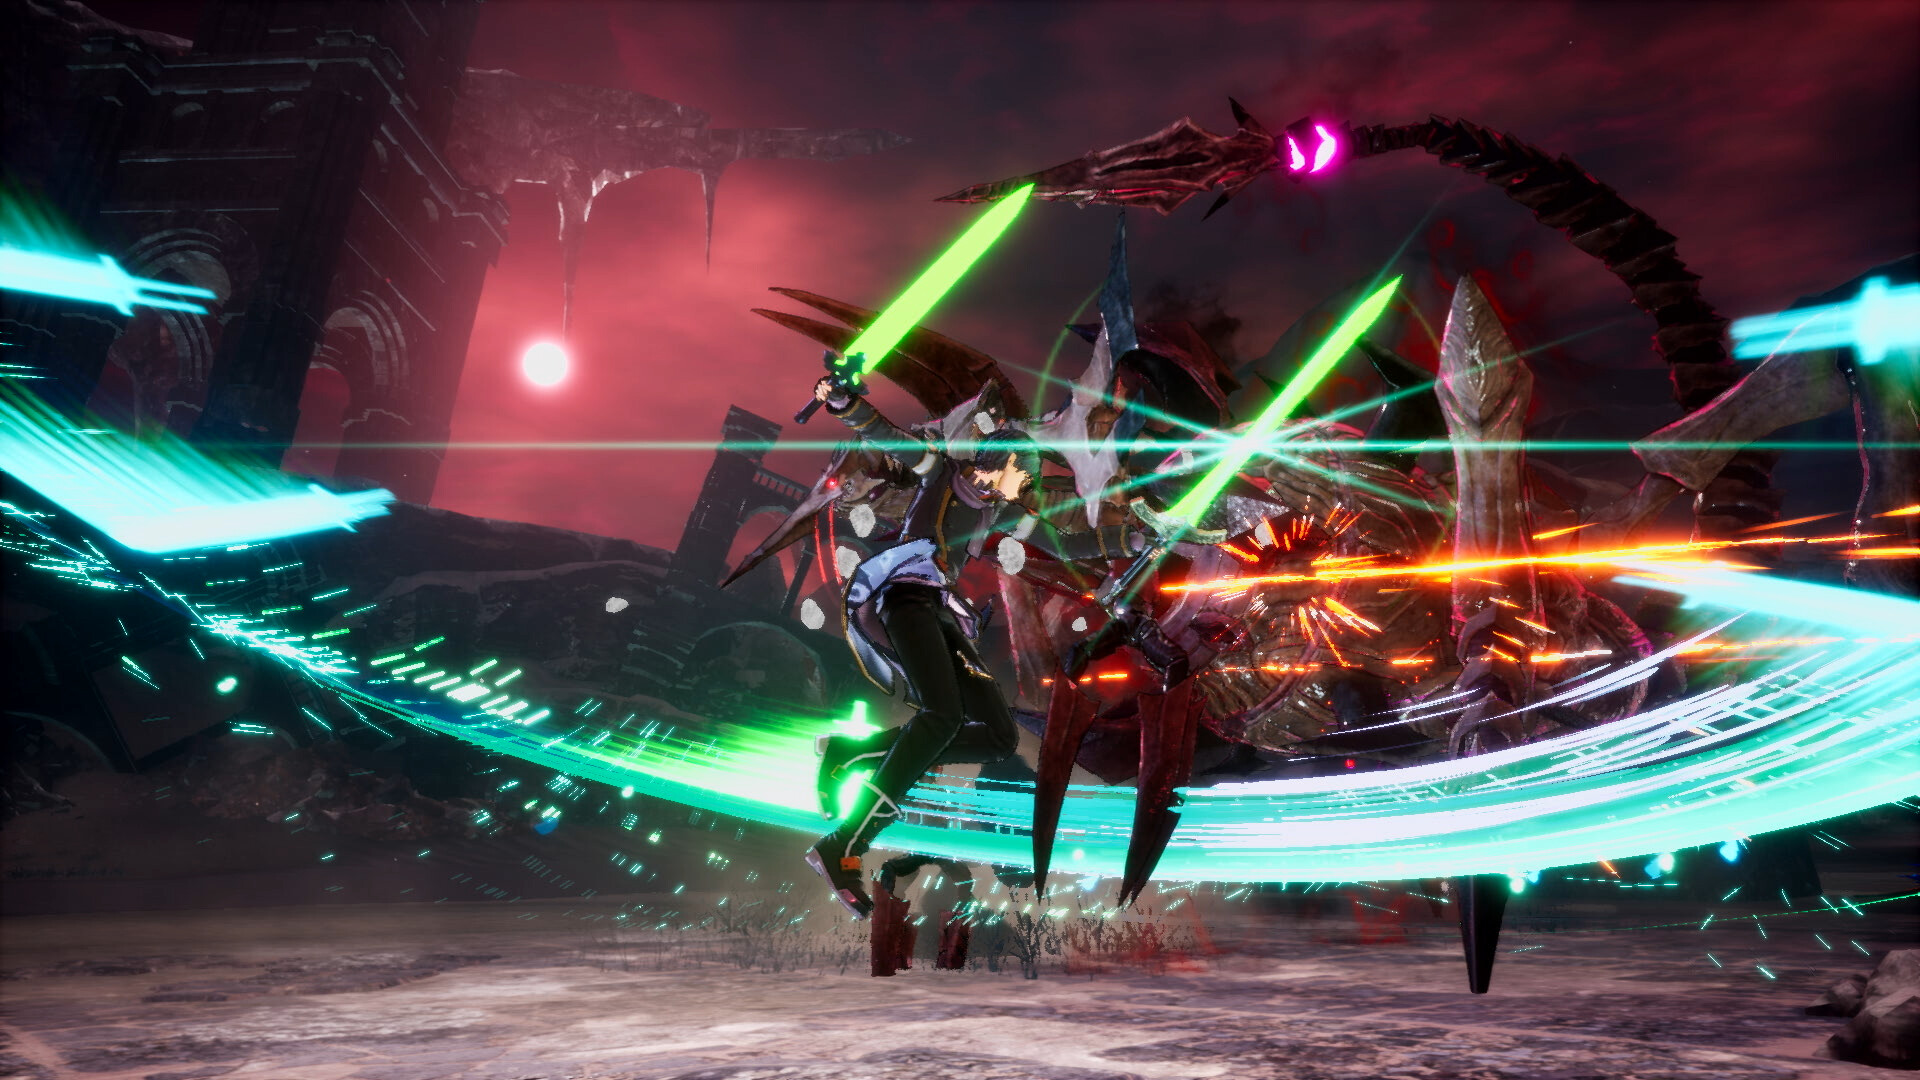 Sword Art Online Last Recollection ganha Data de Lançamento